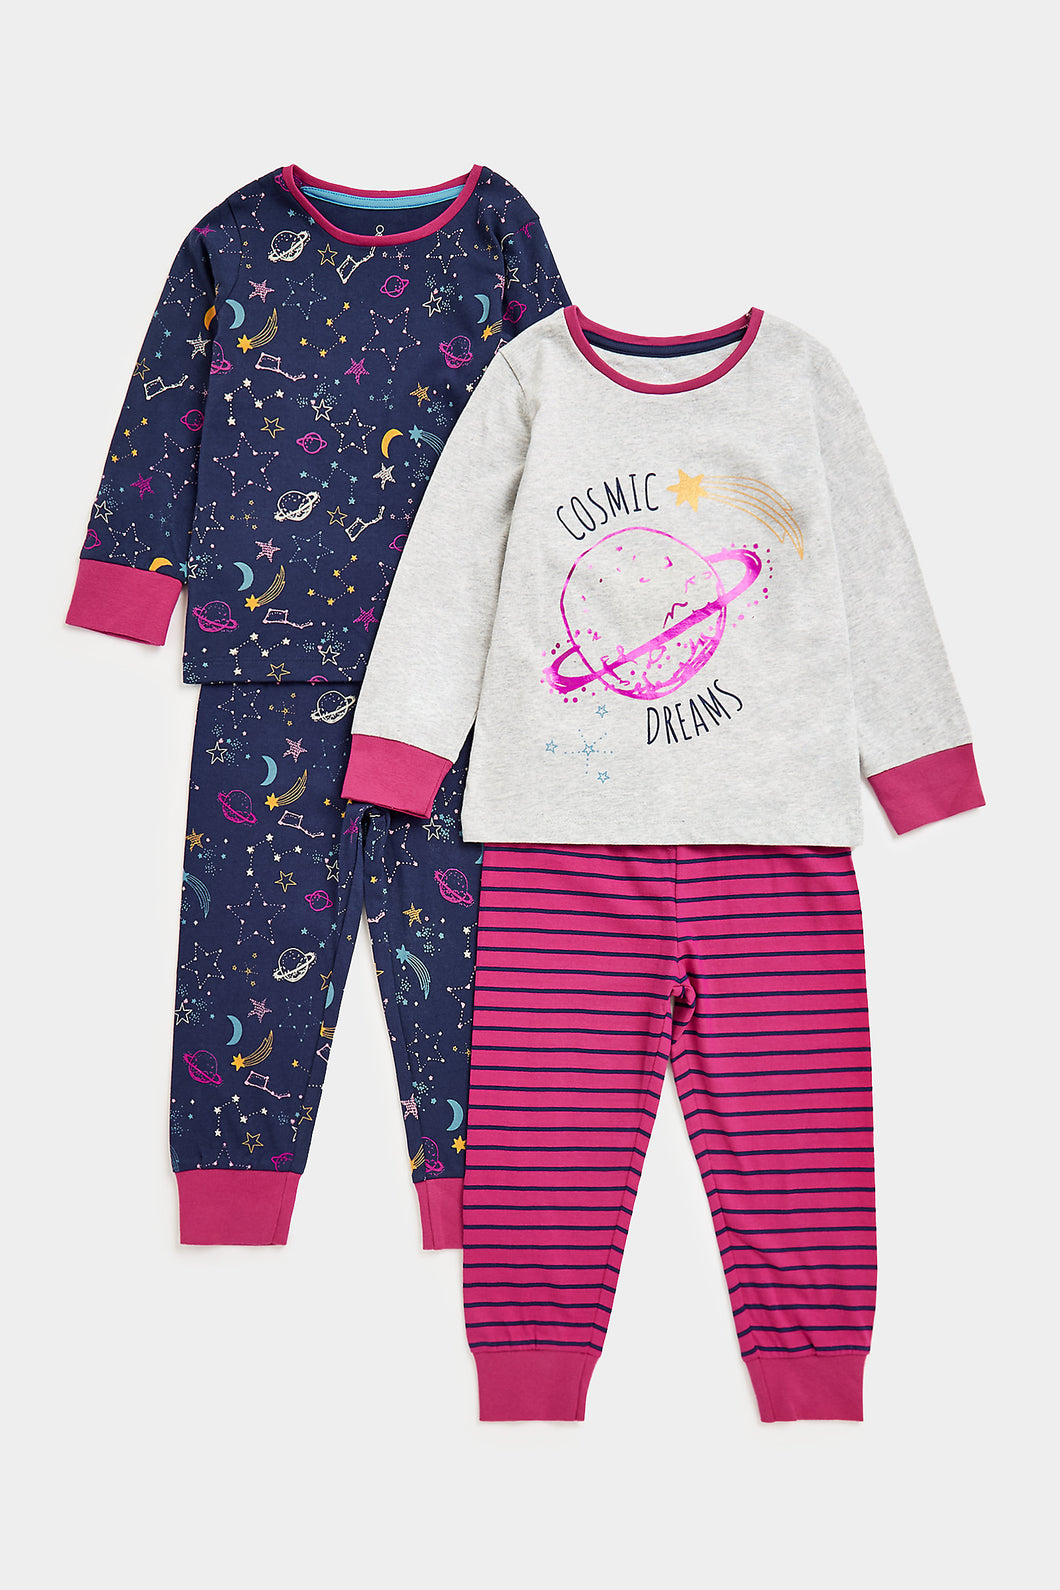 Mothercare Cosmic Dreams Pyjamas - 2 Pack